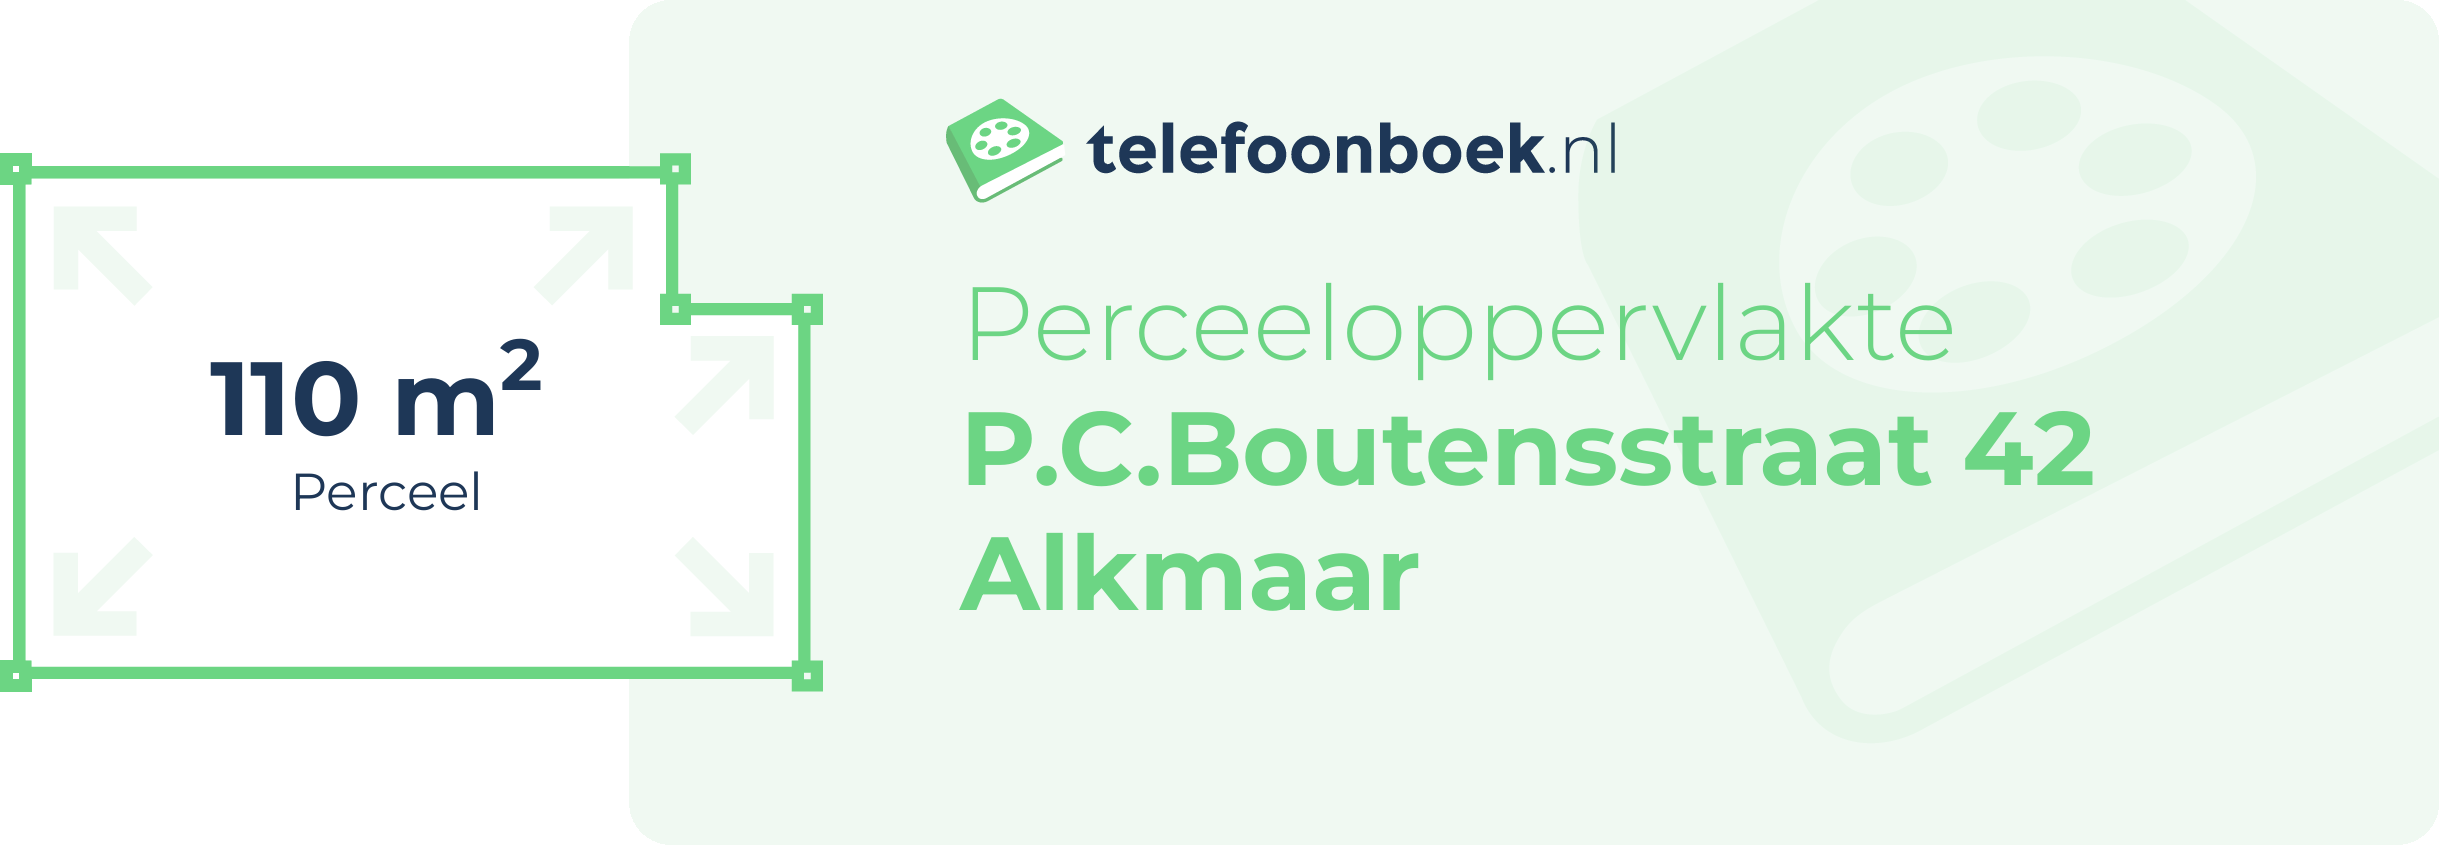 Perceeloppervlakte P.C.Boutensstraat 42 Alkmaar